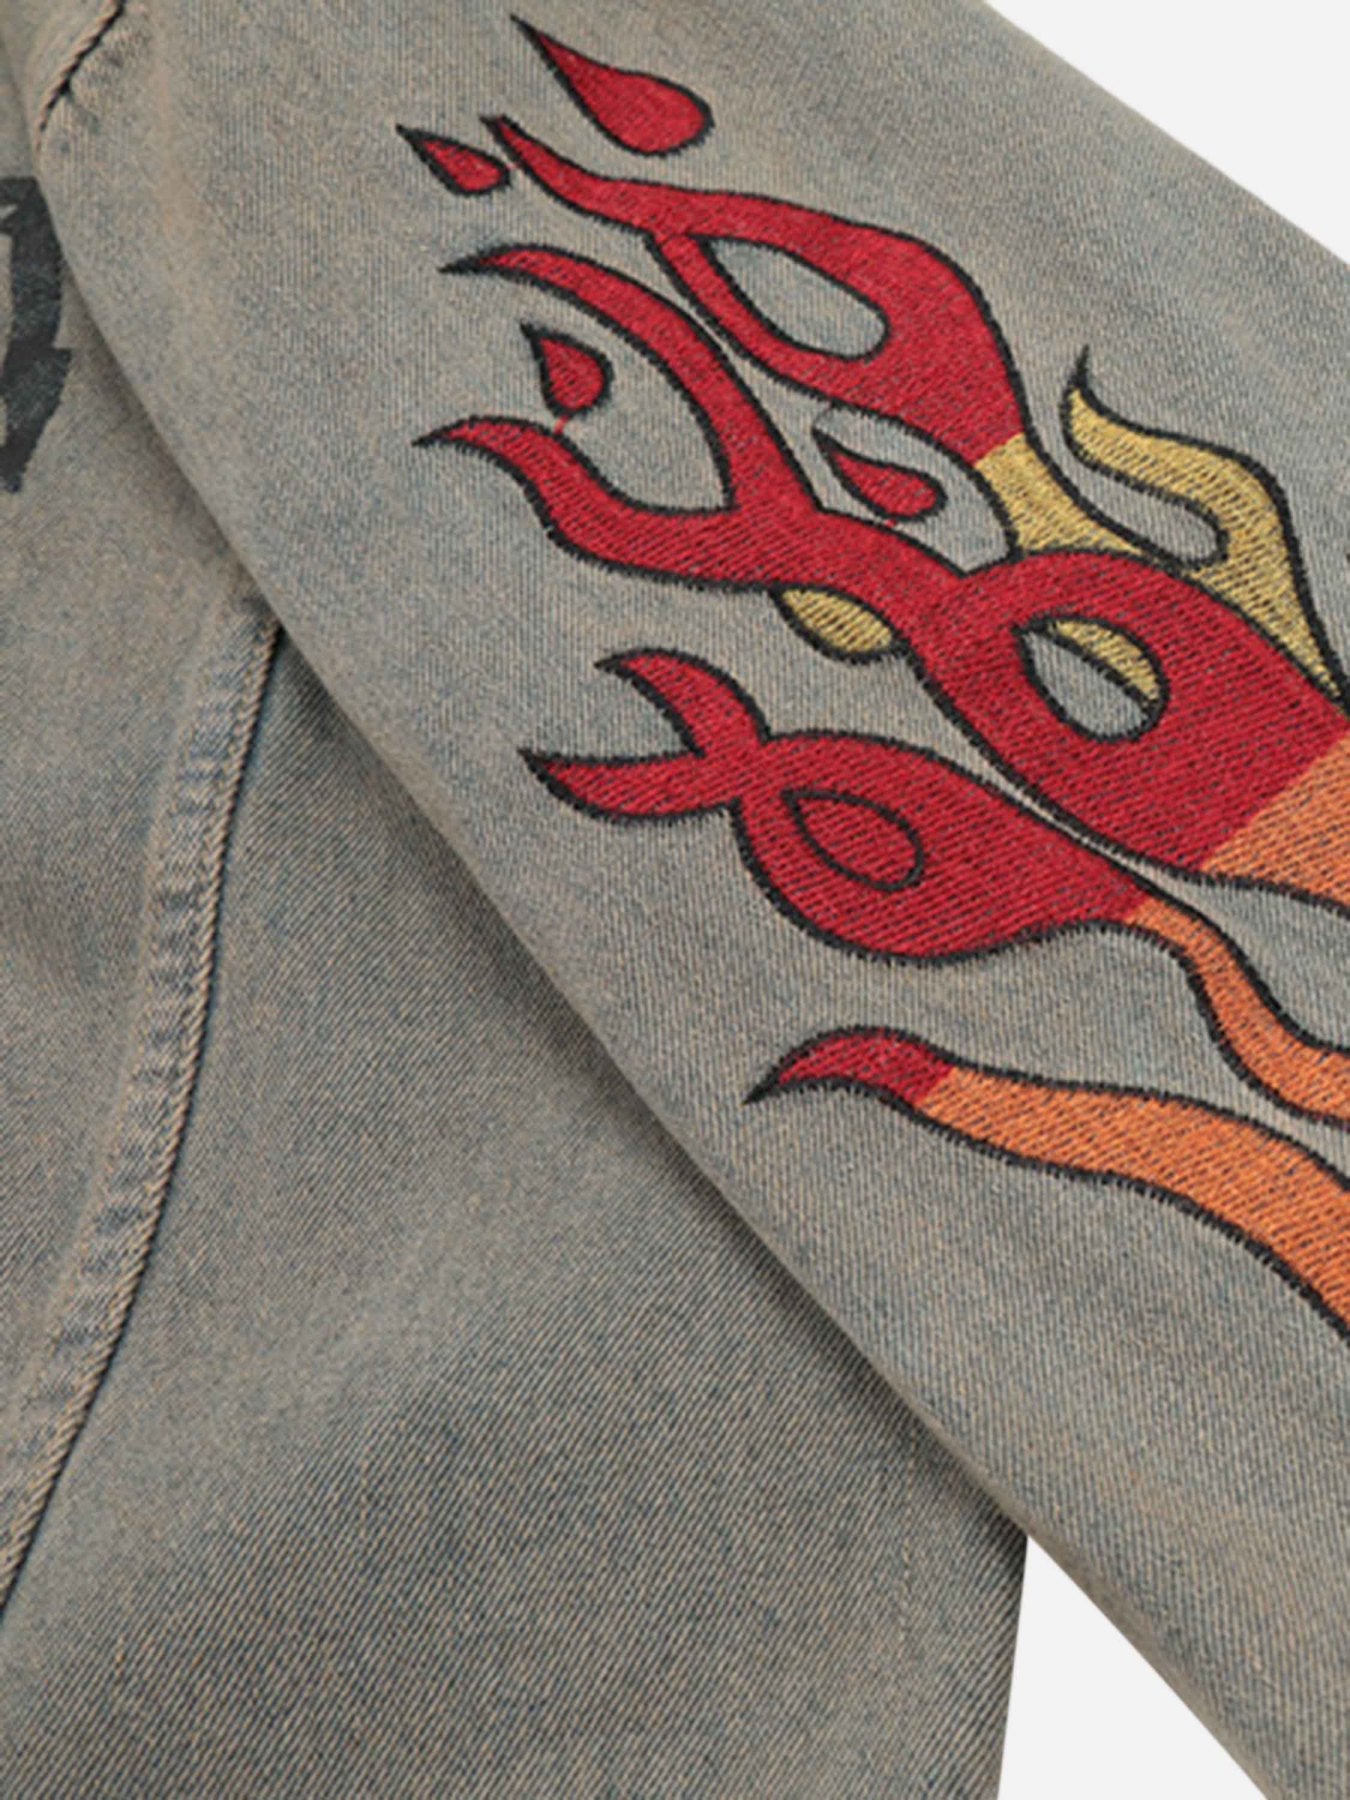 Thesupermade Flame Denim Embroidered Burlap Jacket - 1543